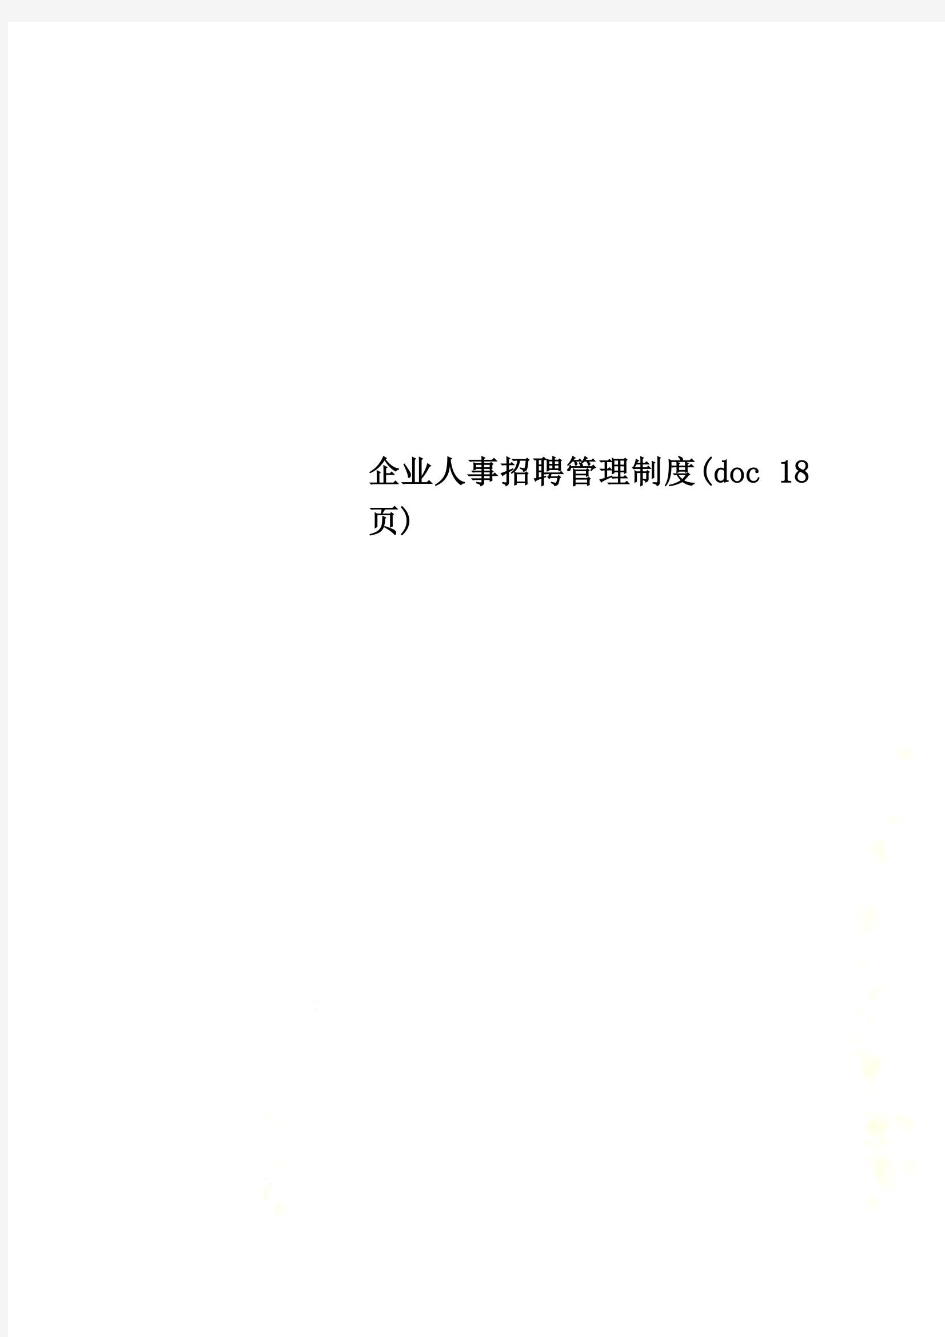 企业人事招聘管理制度(doc 18页)